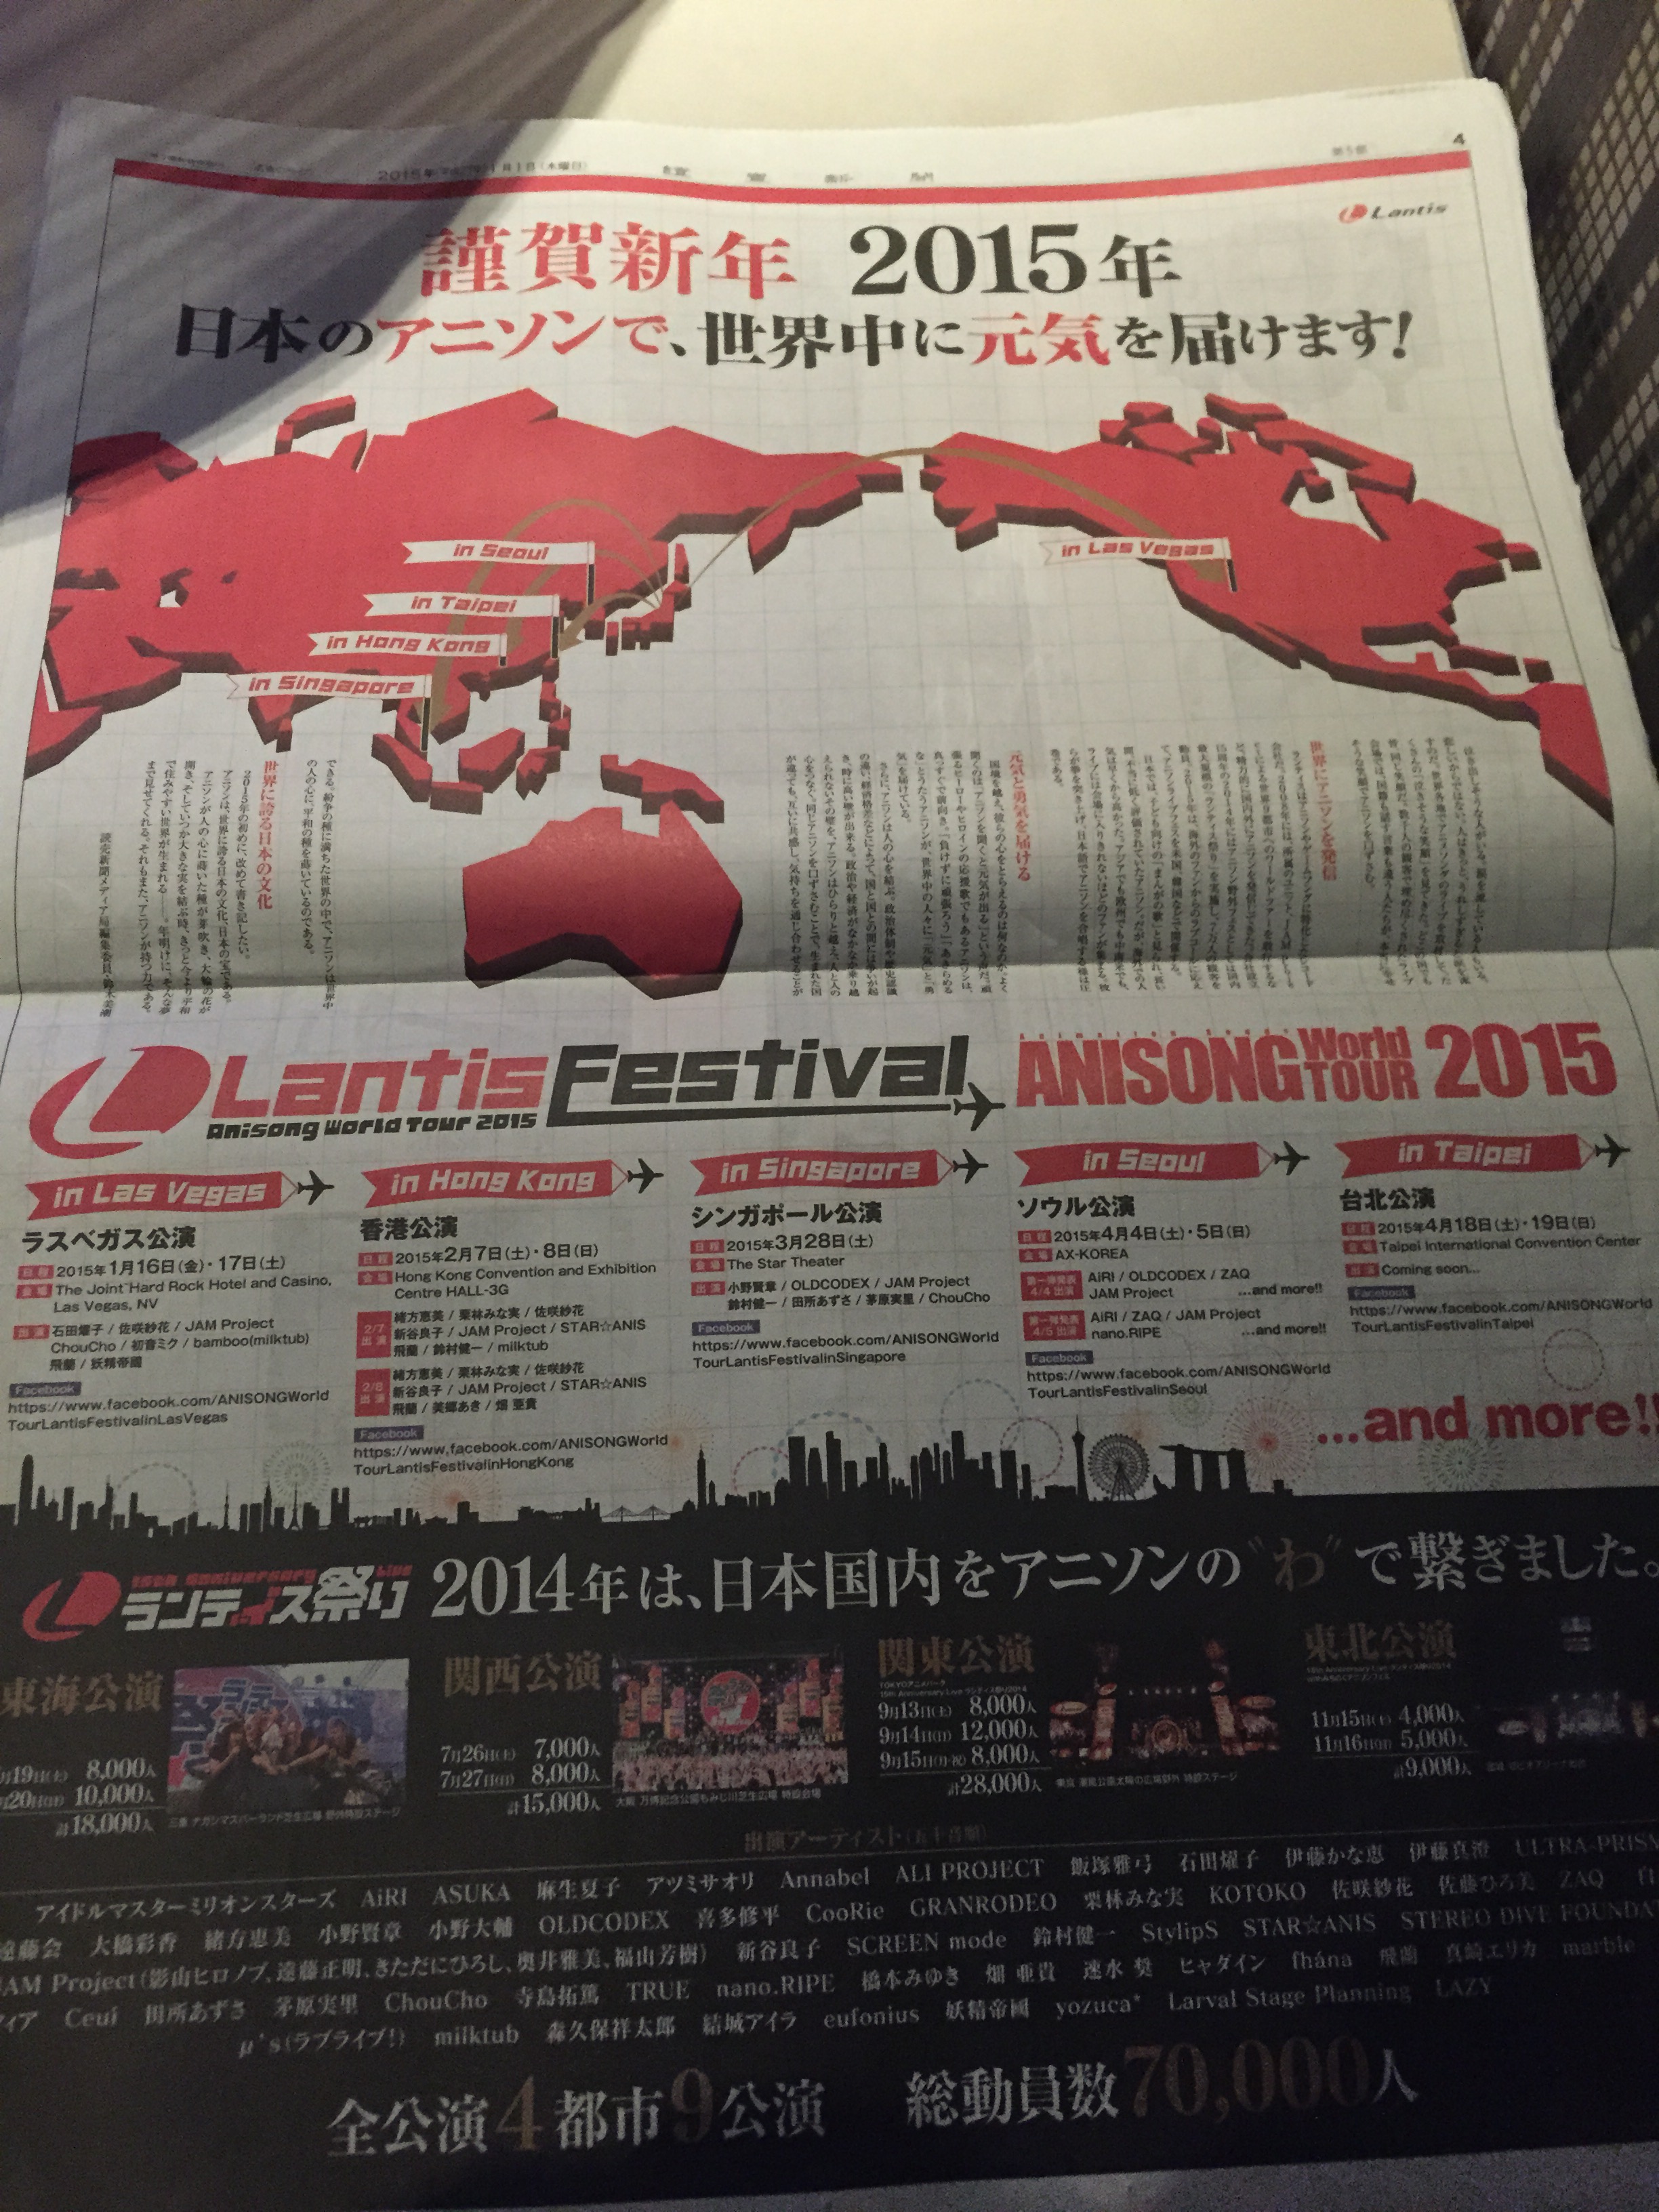 http://www.lantis.jp/15th/staffblog/20150101.jpg